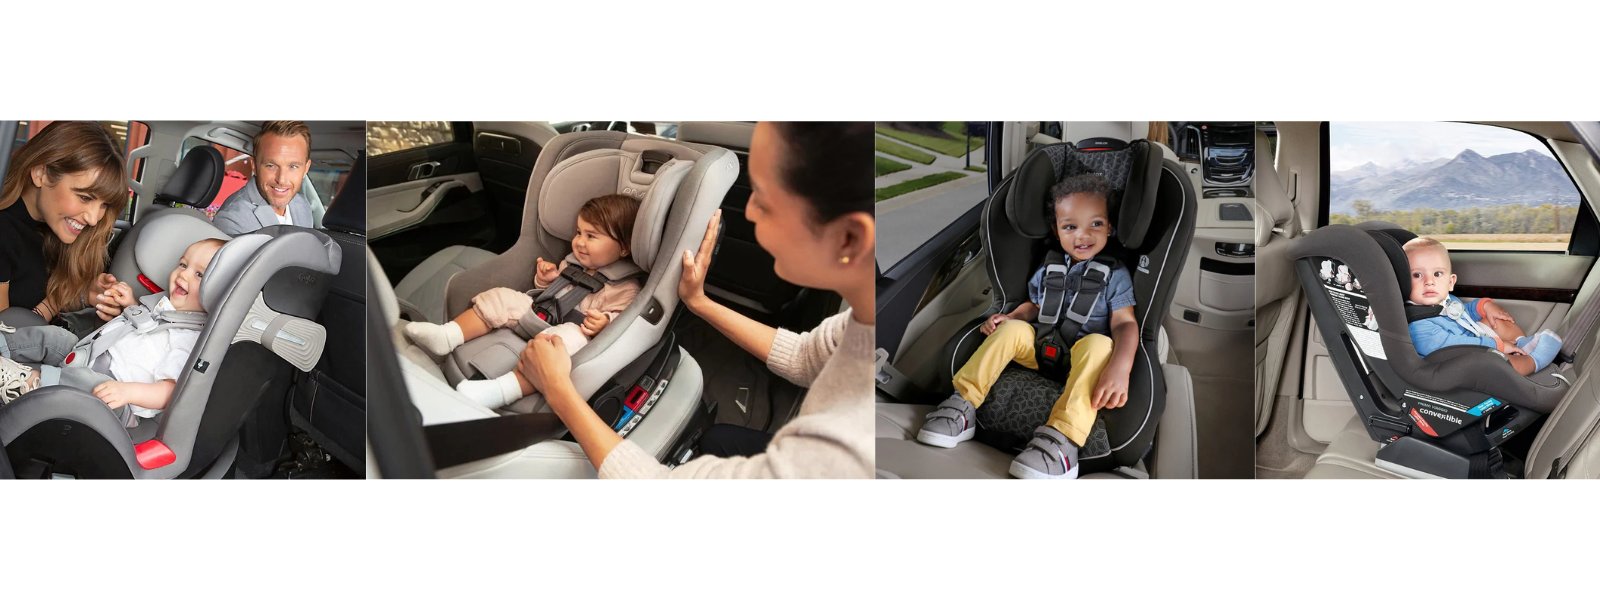 Baby Jogger City Turn vs. Cybex Sirona S Convertible Car Seat Comparison